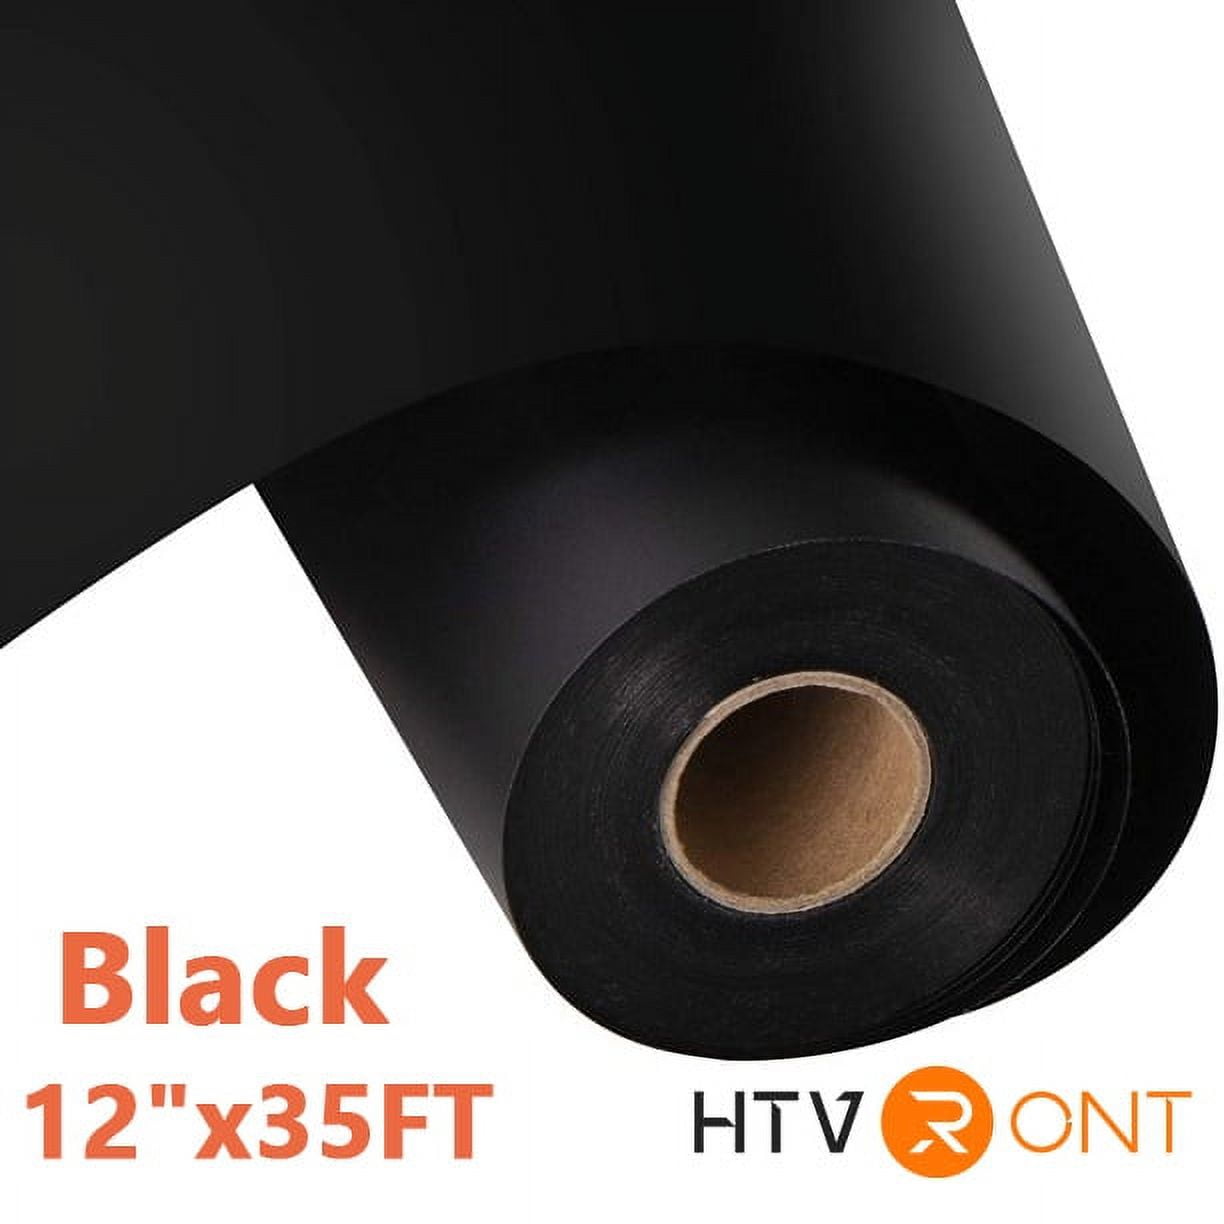 HTVRONT Black Permanent Vinyl, Black Vinyl for Cricut - 12 x 40 FT Black  Adhesive Vinyl Roll for Cricut, Silhouette, Cameo Cutters, Signs